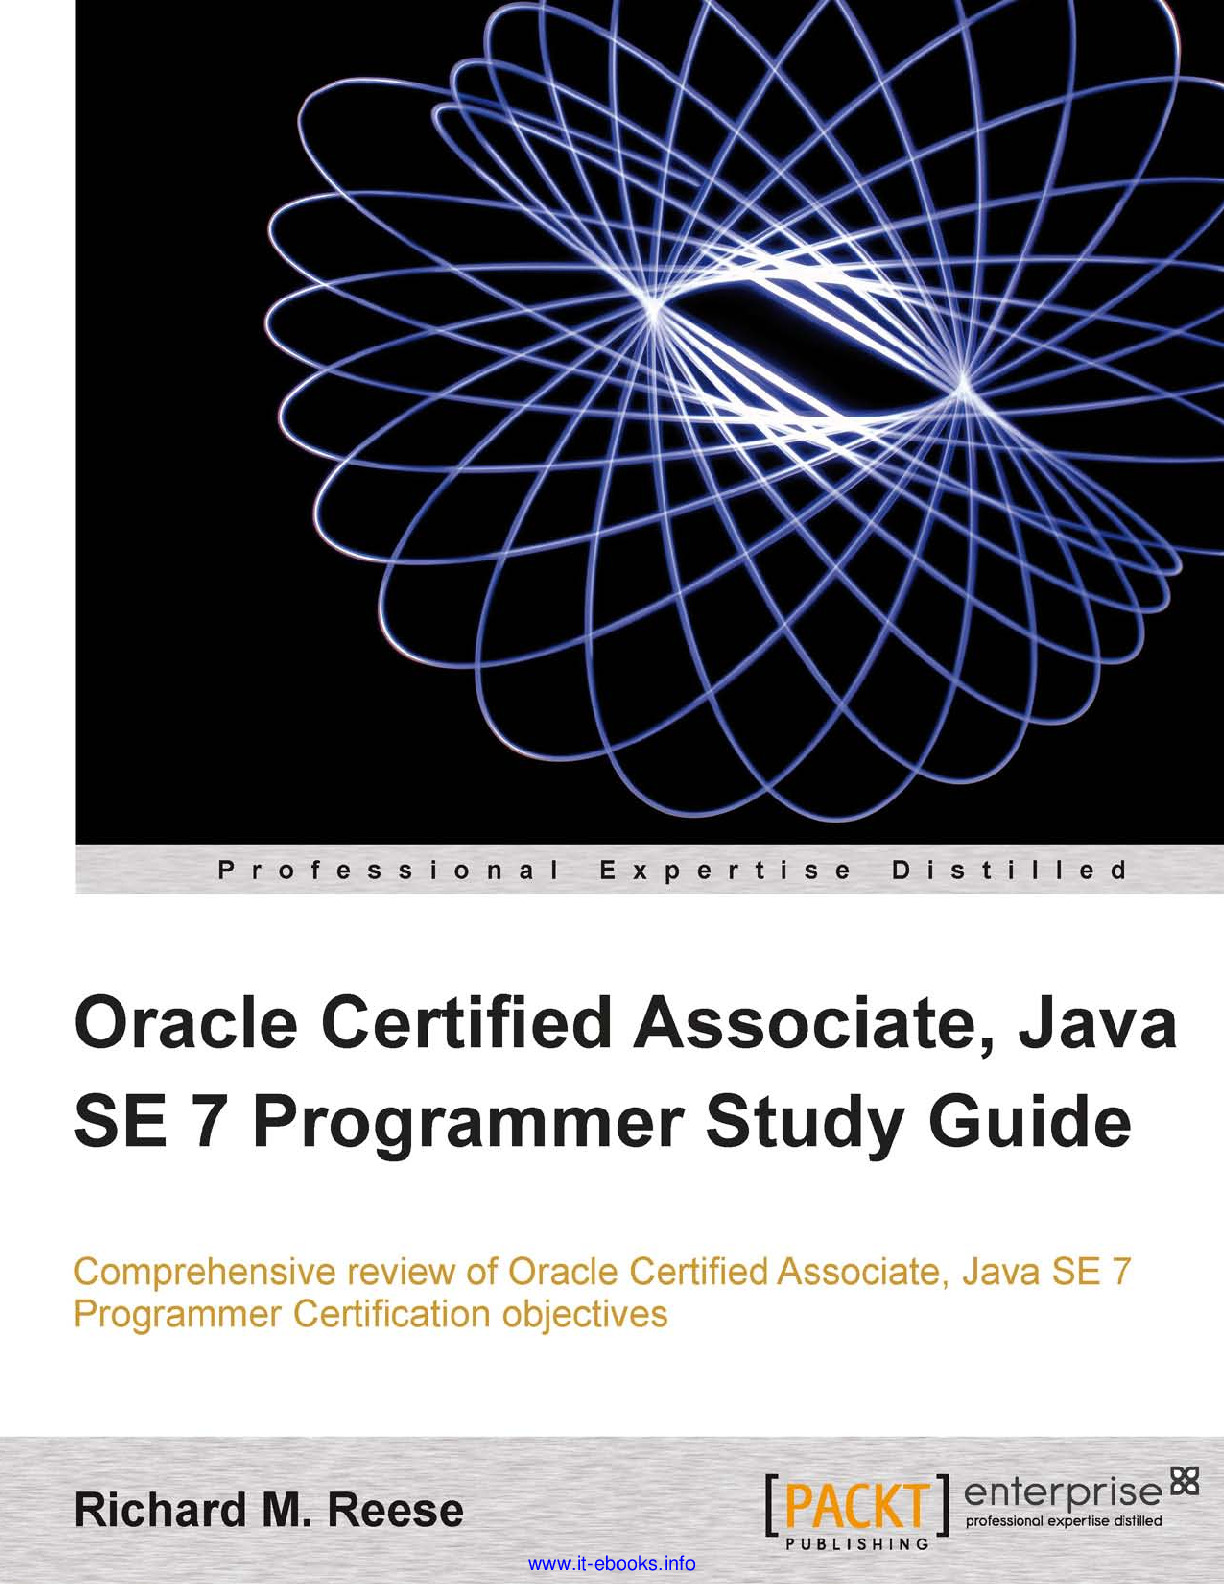 [JAVA][Oracle Certified Associate, Java SE 7 Programmer Study Guide]